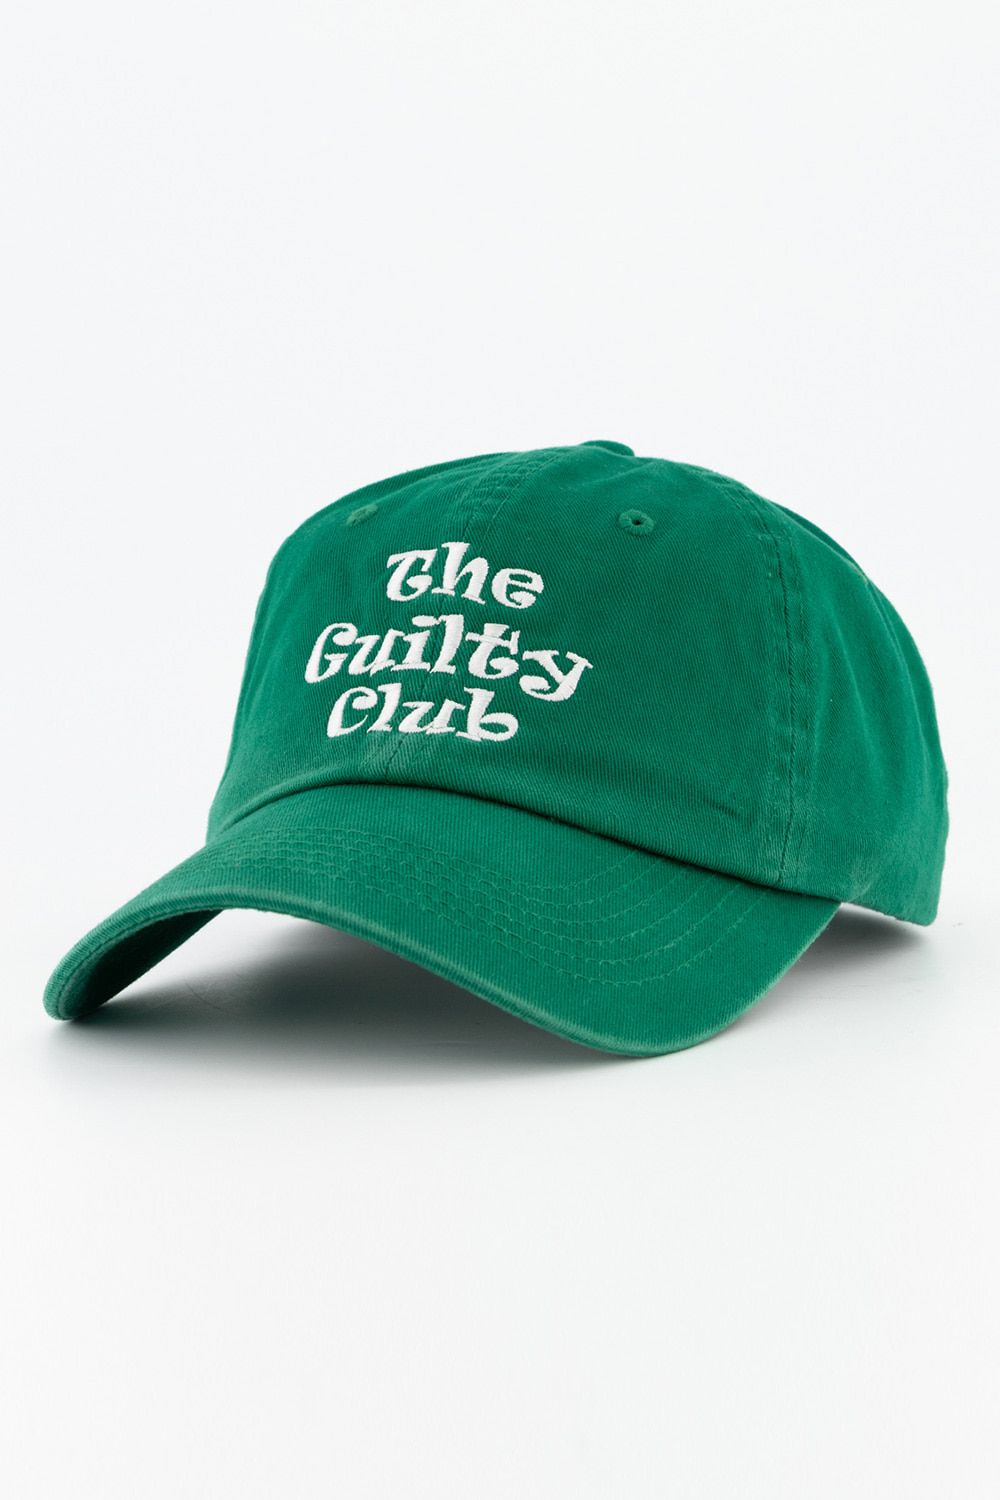 THE GUILTY CLUB  Ball Cap Green